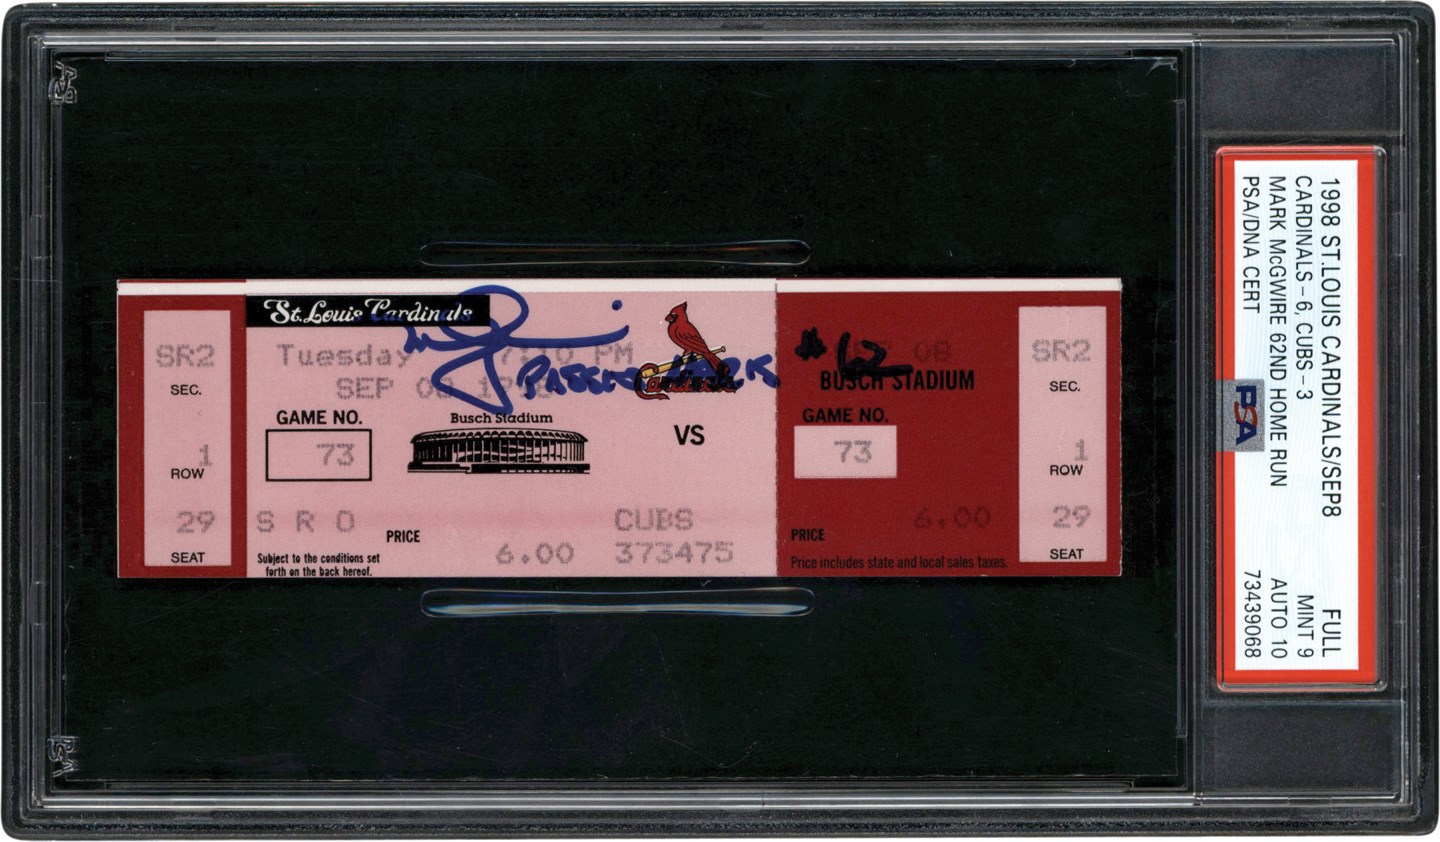 - 1998 Mark McGwire Signed 62nd Home Run Full Ticket - "Passes Maris #62" PSA MINT 9 Auto 10 (Highest Graded)